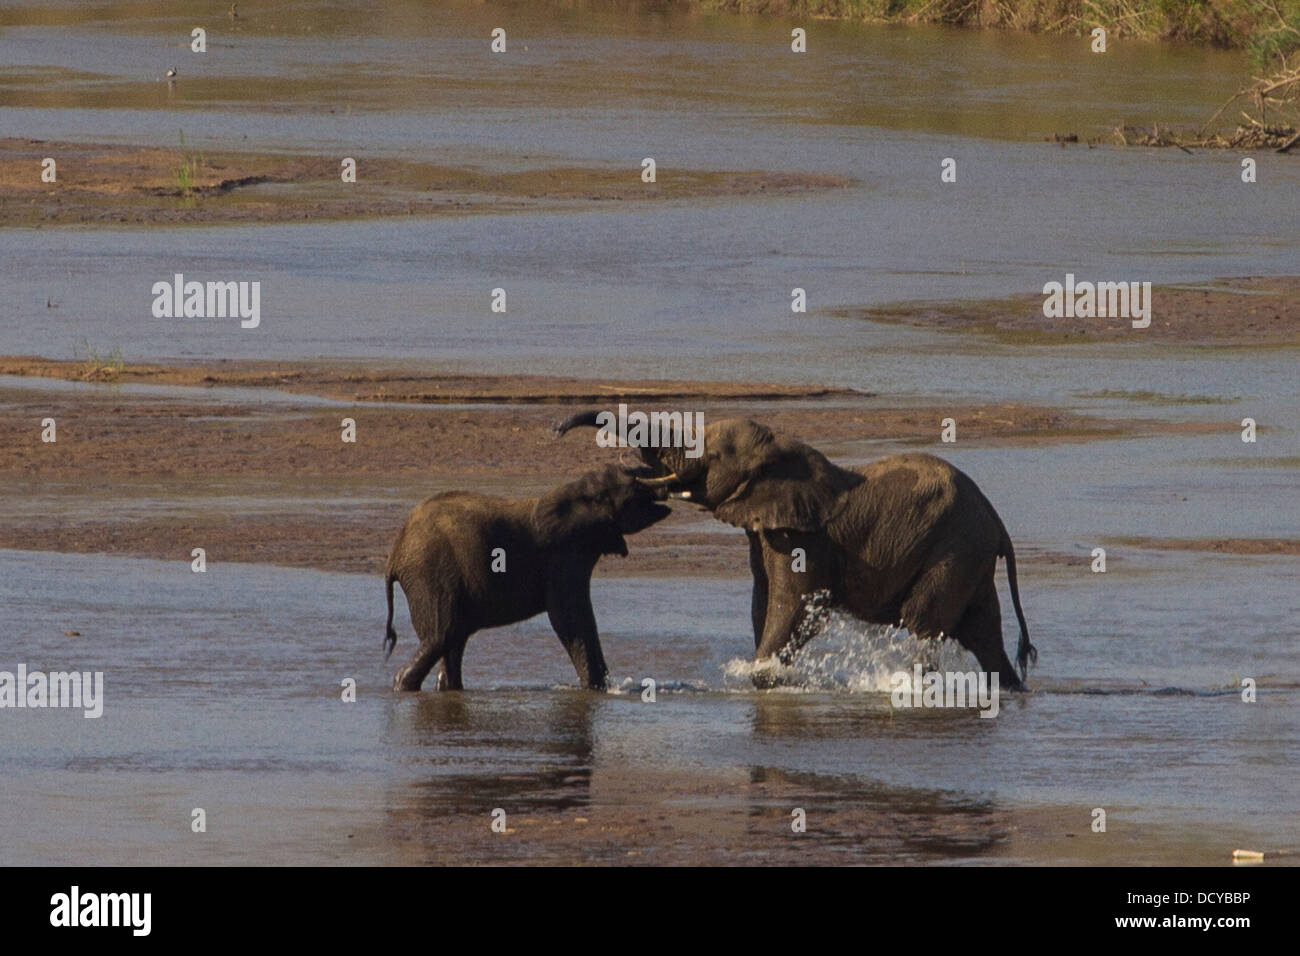 Afrikanische Elefanten (Loxodonta Africana) Kreuzung River in Hluhluwe Imfolozi Nationalpark, Südafrika Stockfoto